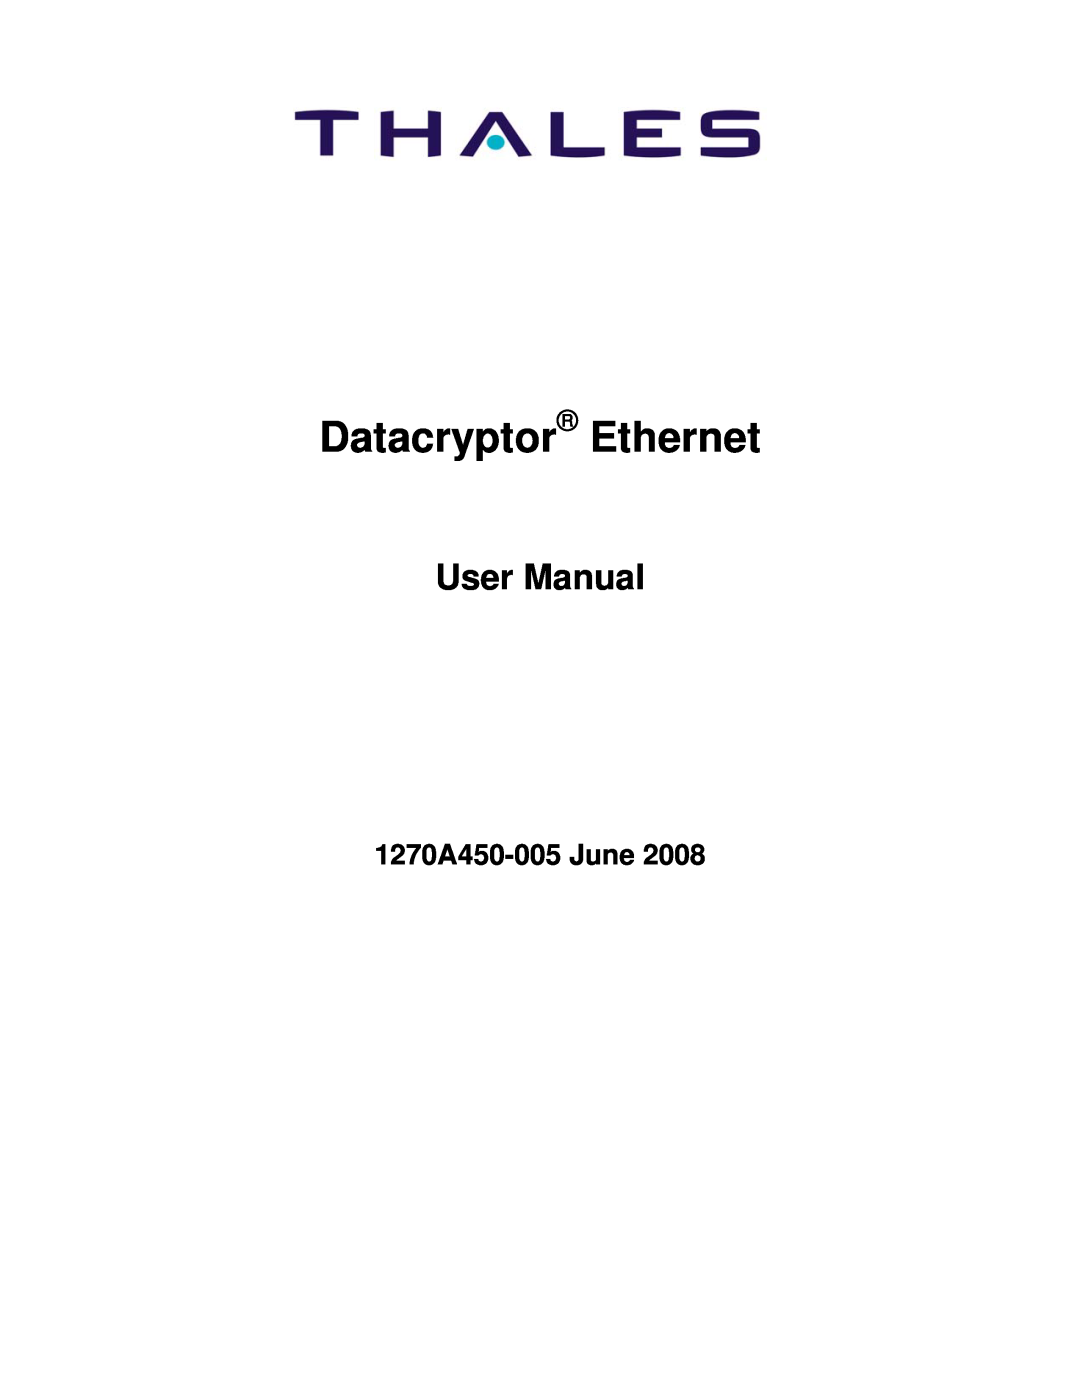 Angenieux user manual 1270A450-005 June, Datacryptor Ethernet, User Manual 